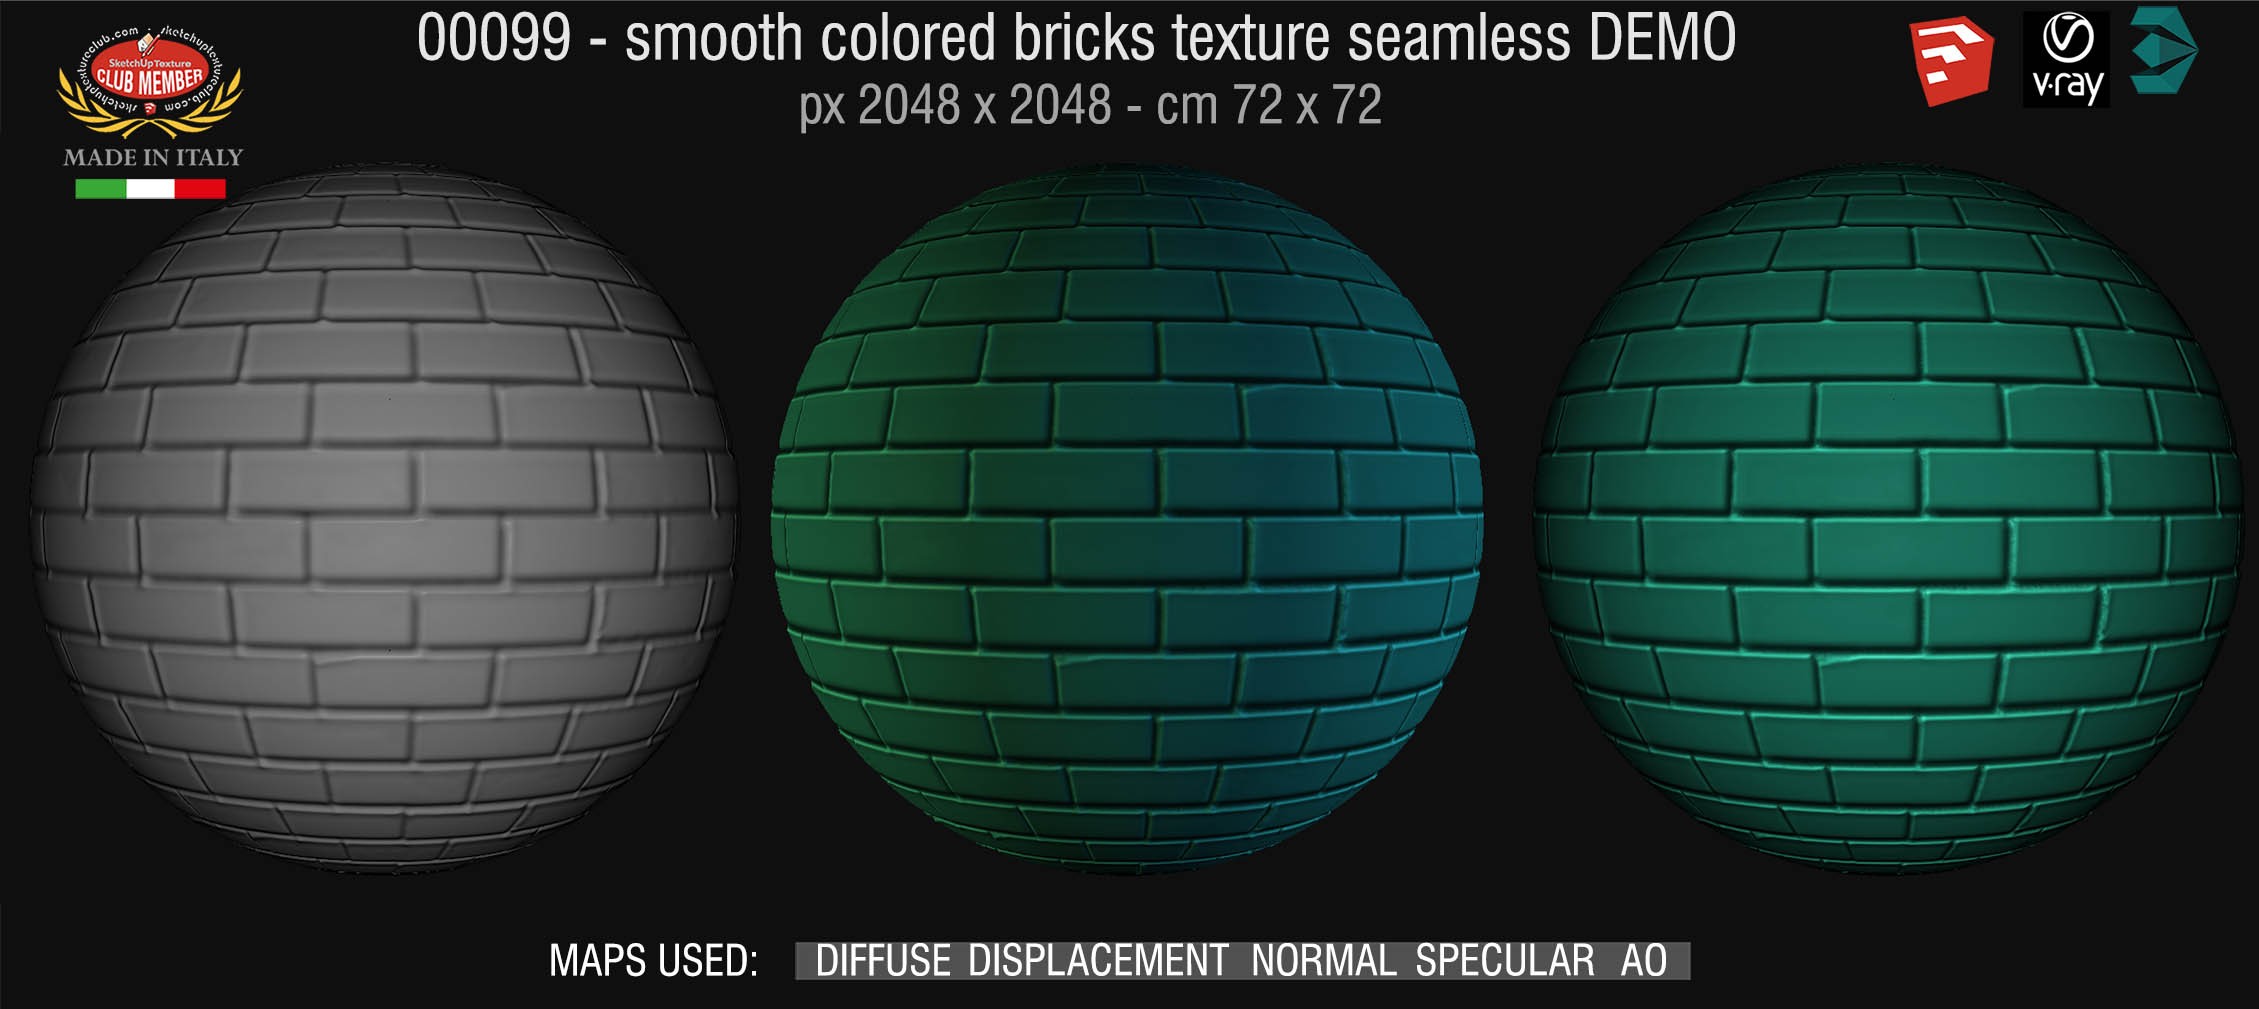 00099 smooth colored bricks texture seamless + maps DEMO